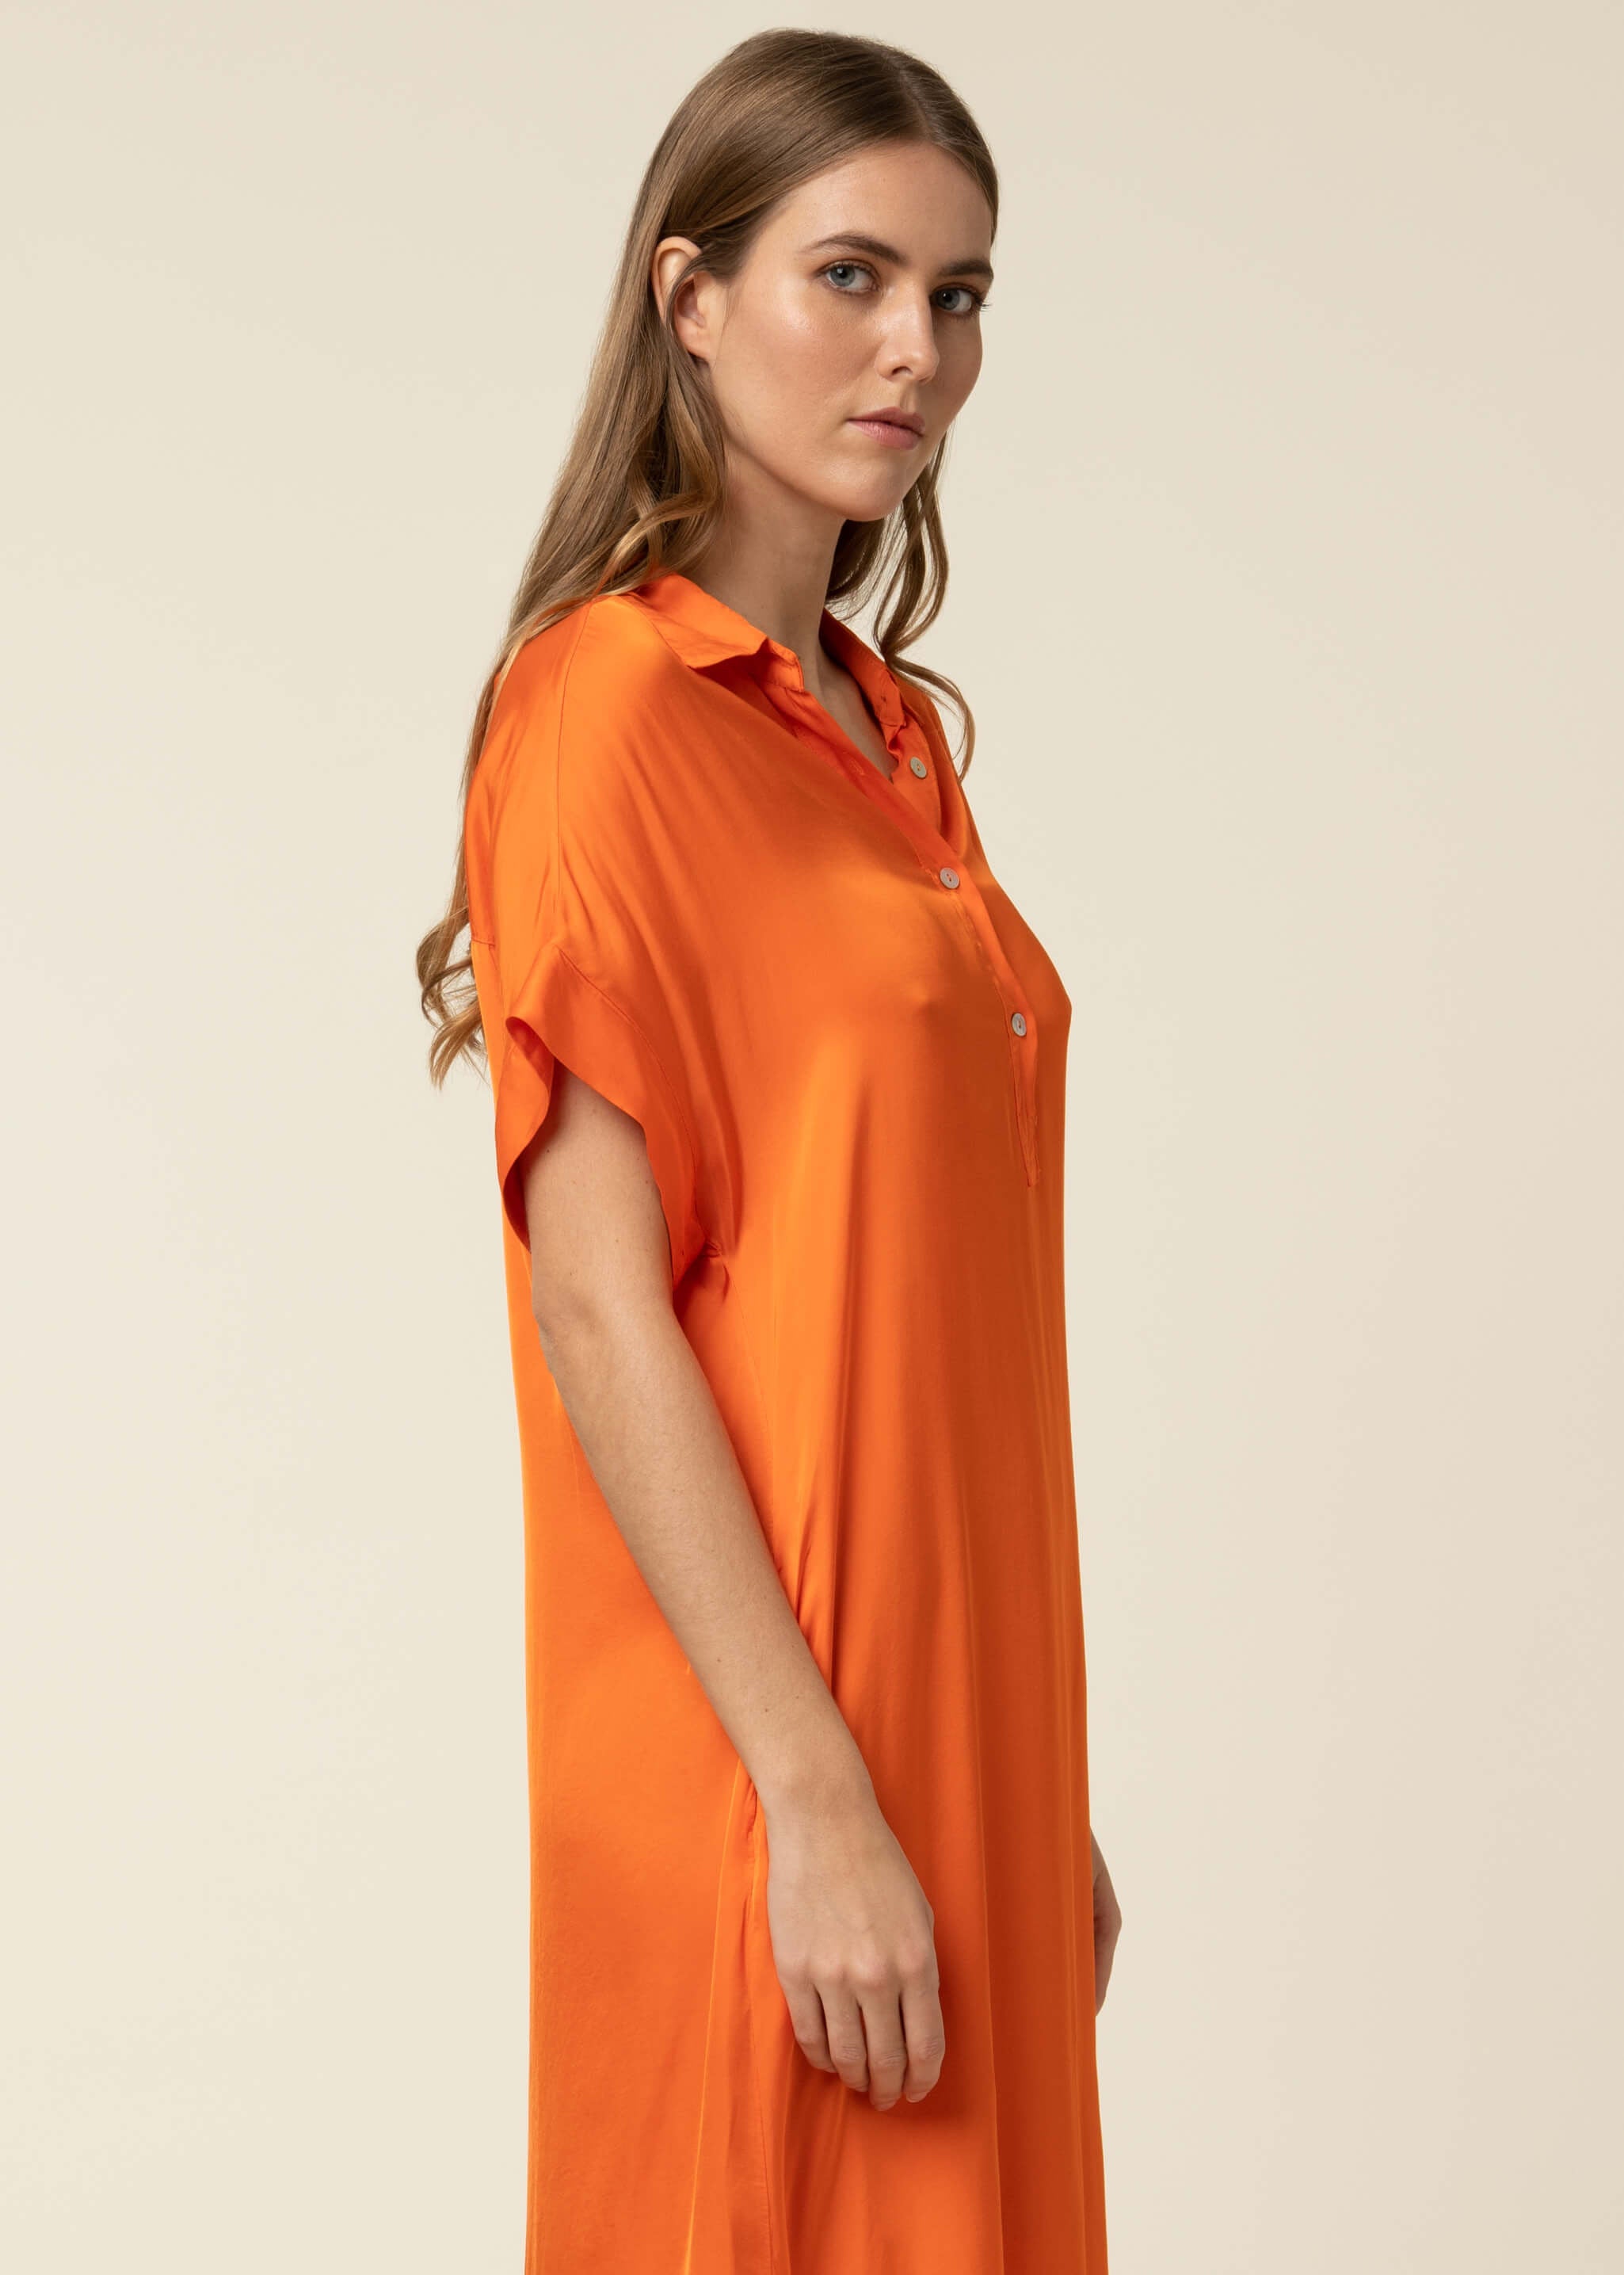 GALIENA orange long dress